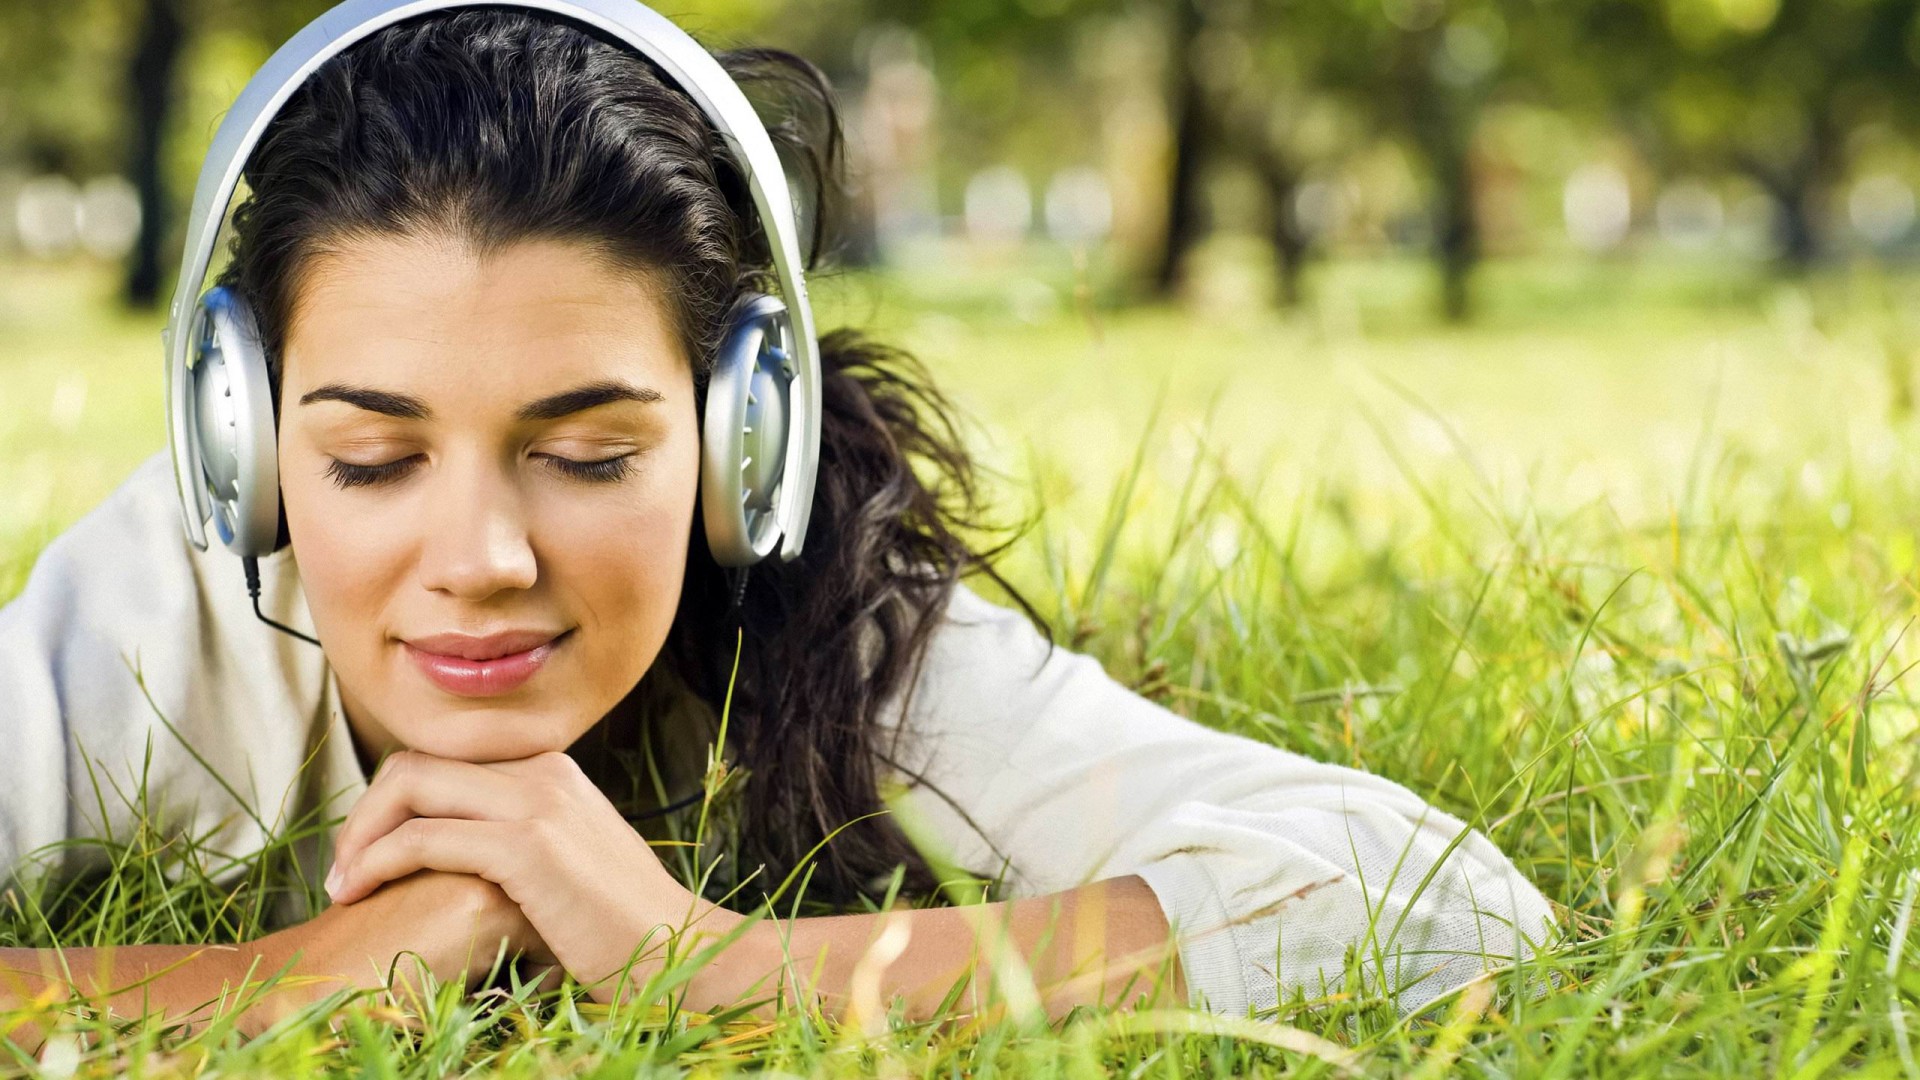 5 health benefits of music